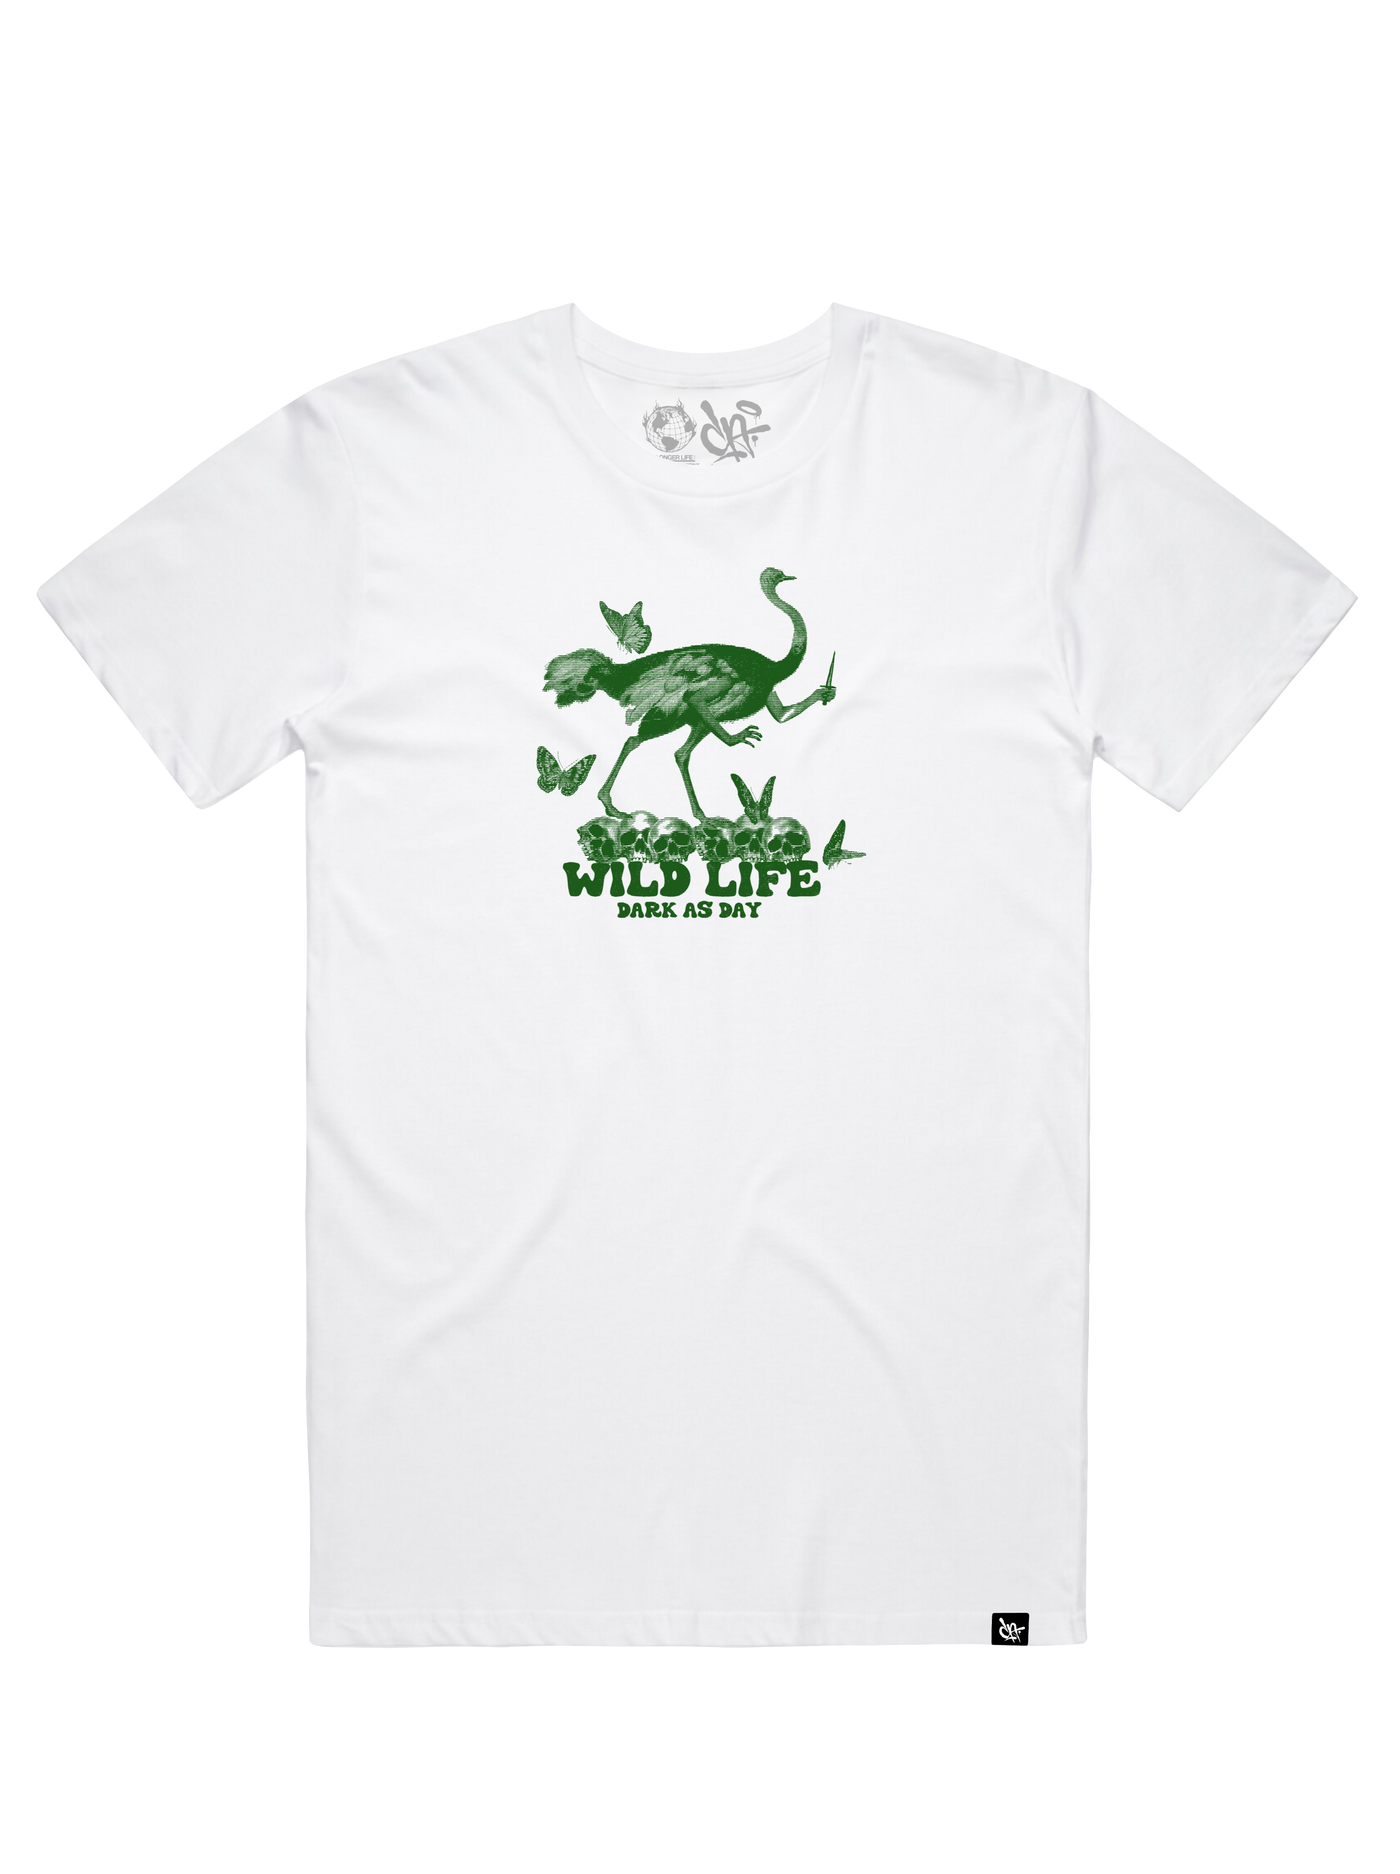 Wildlife T-shirt